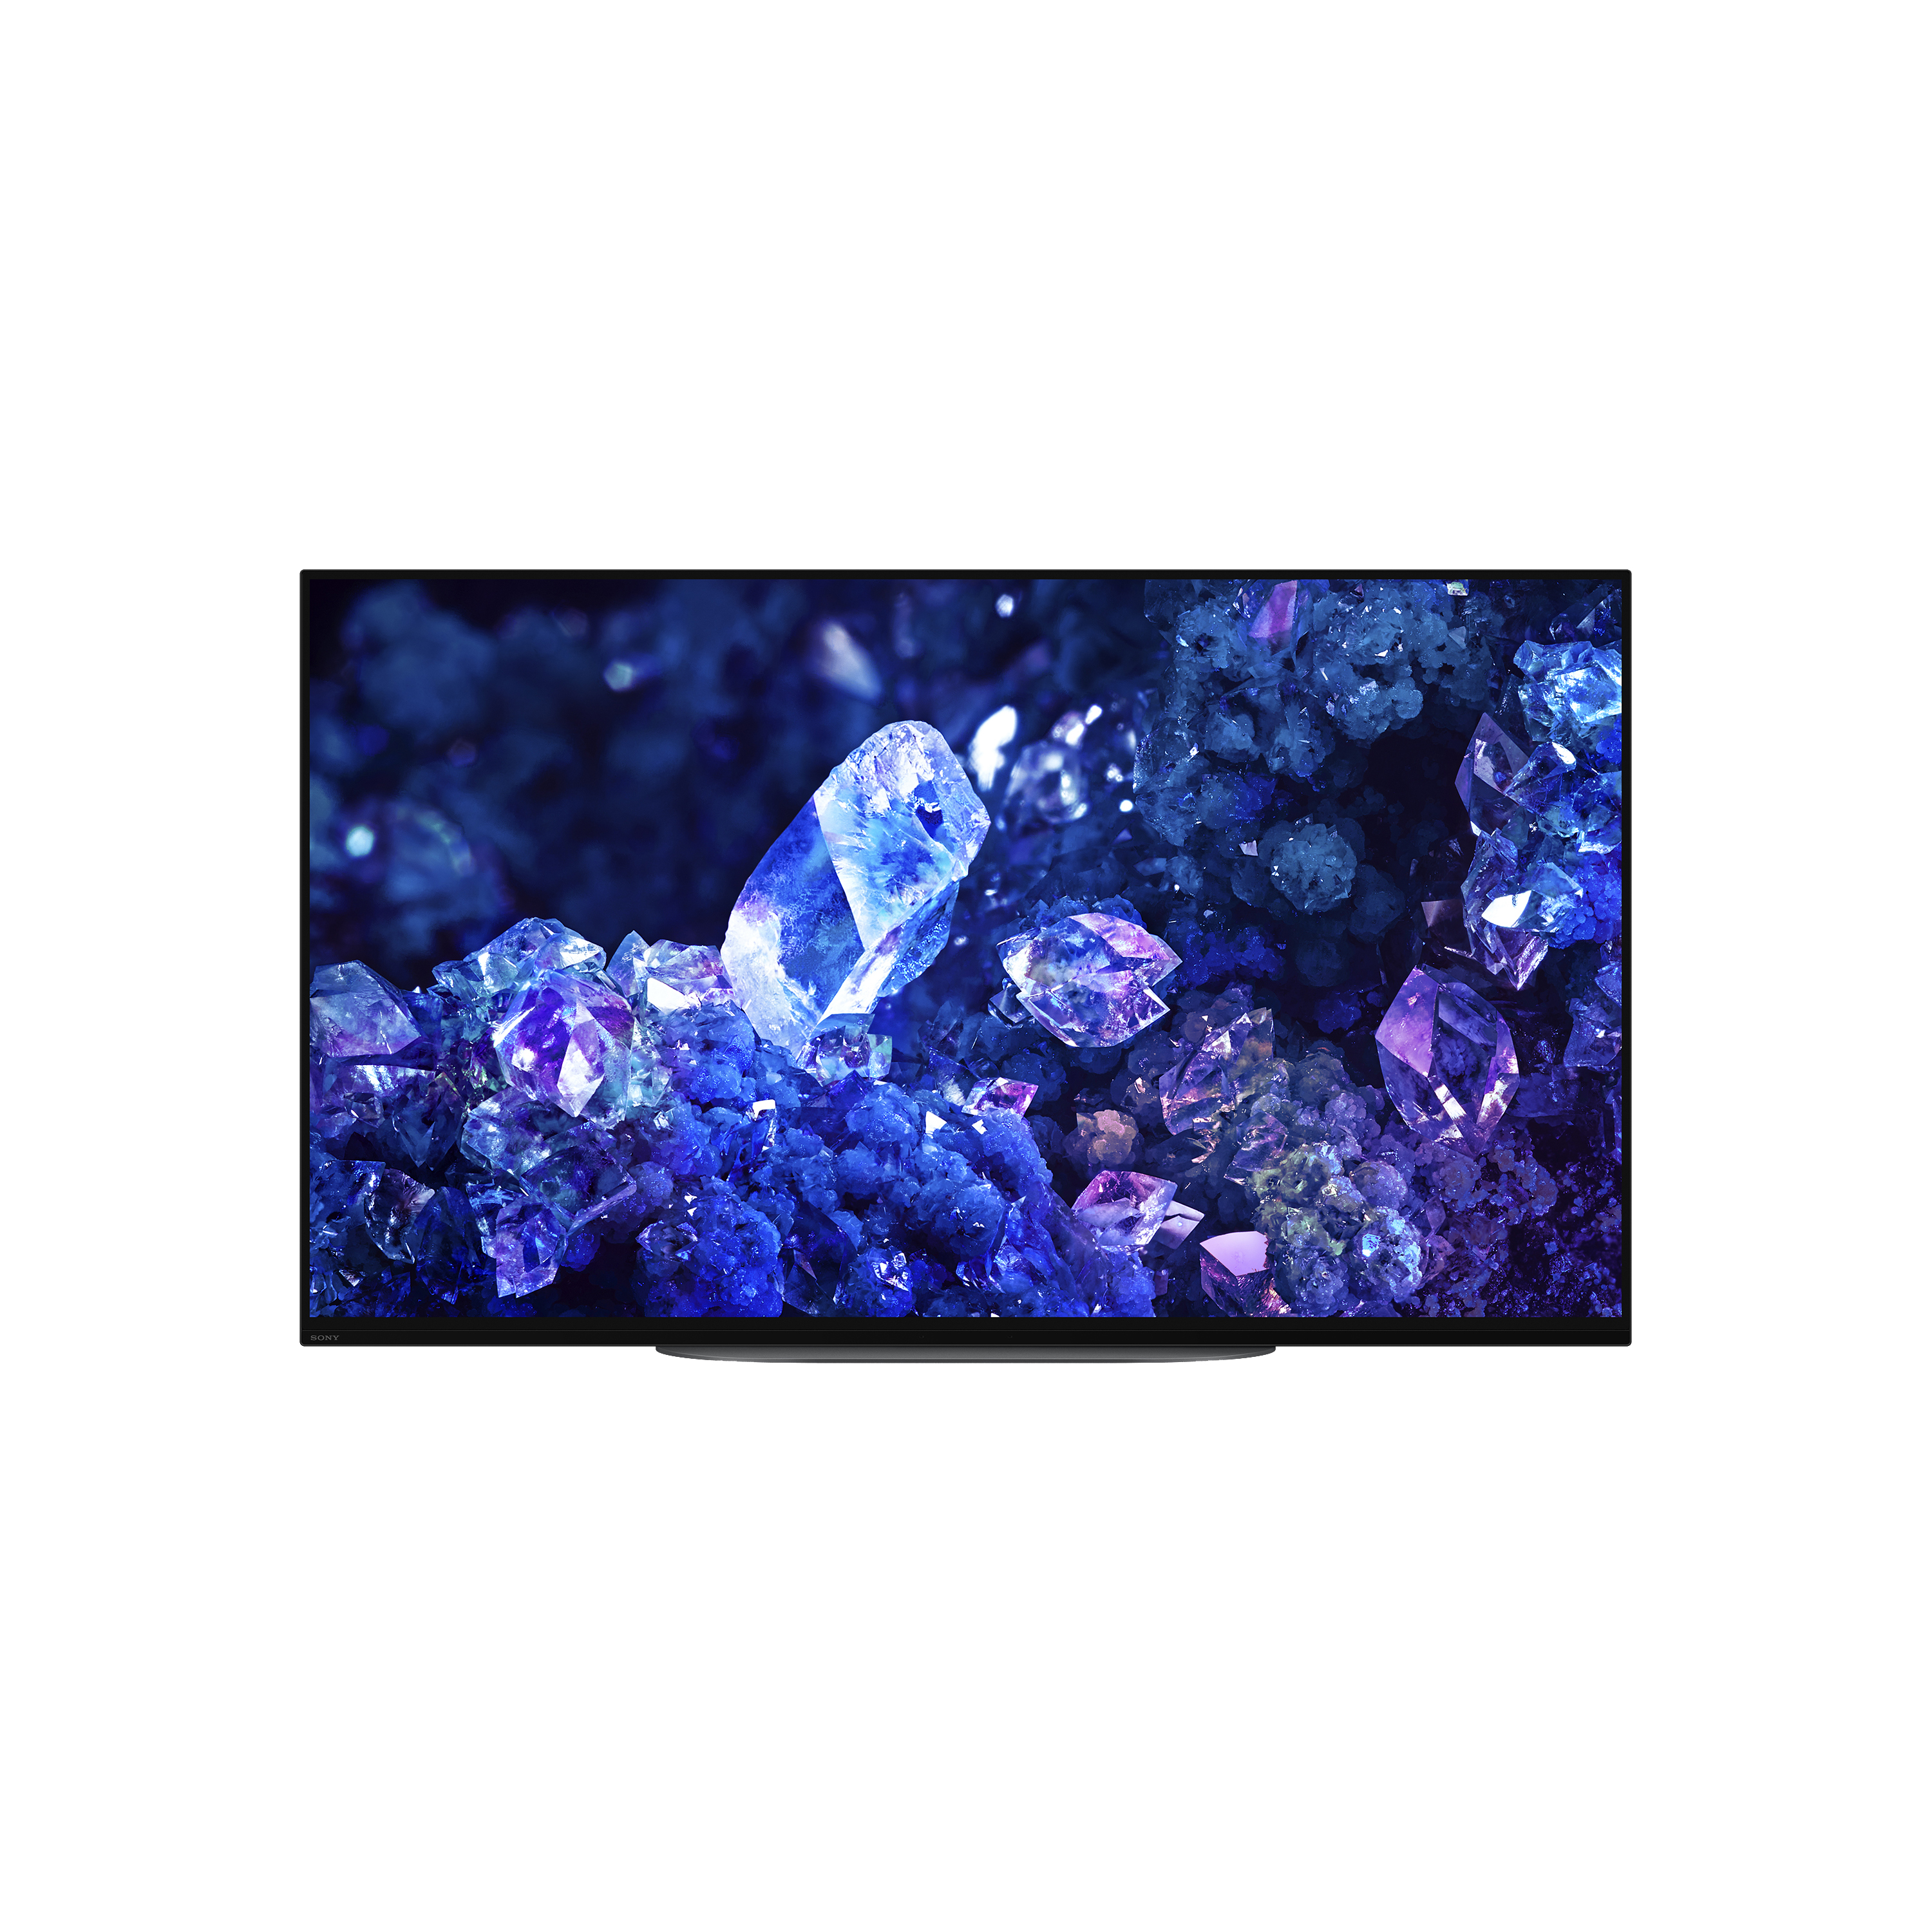 BRAVIA A90K 螢幕顯示藍色與紫色水晶影像的正面照